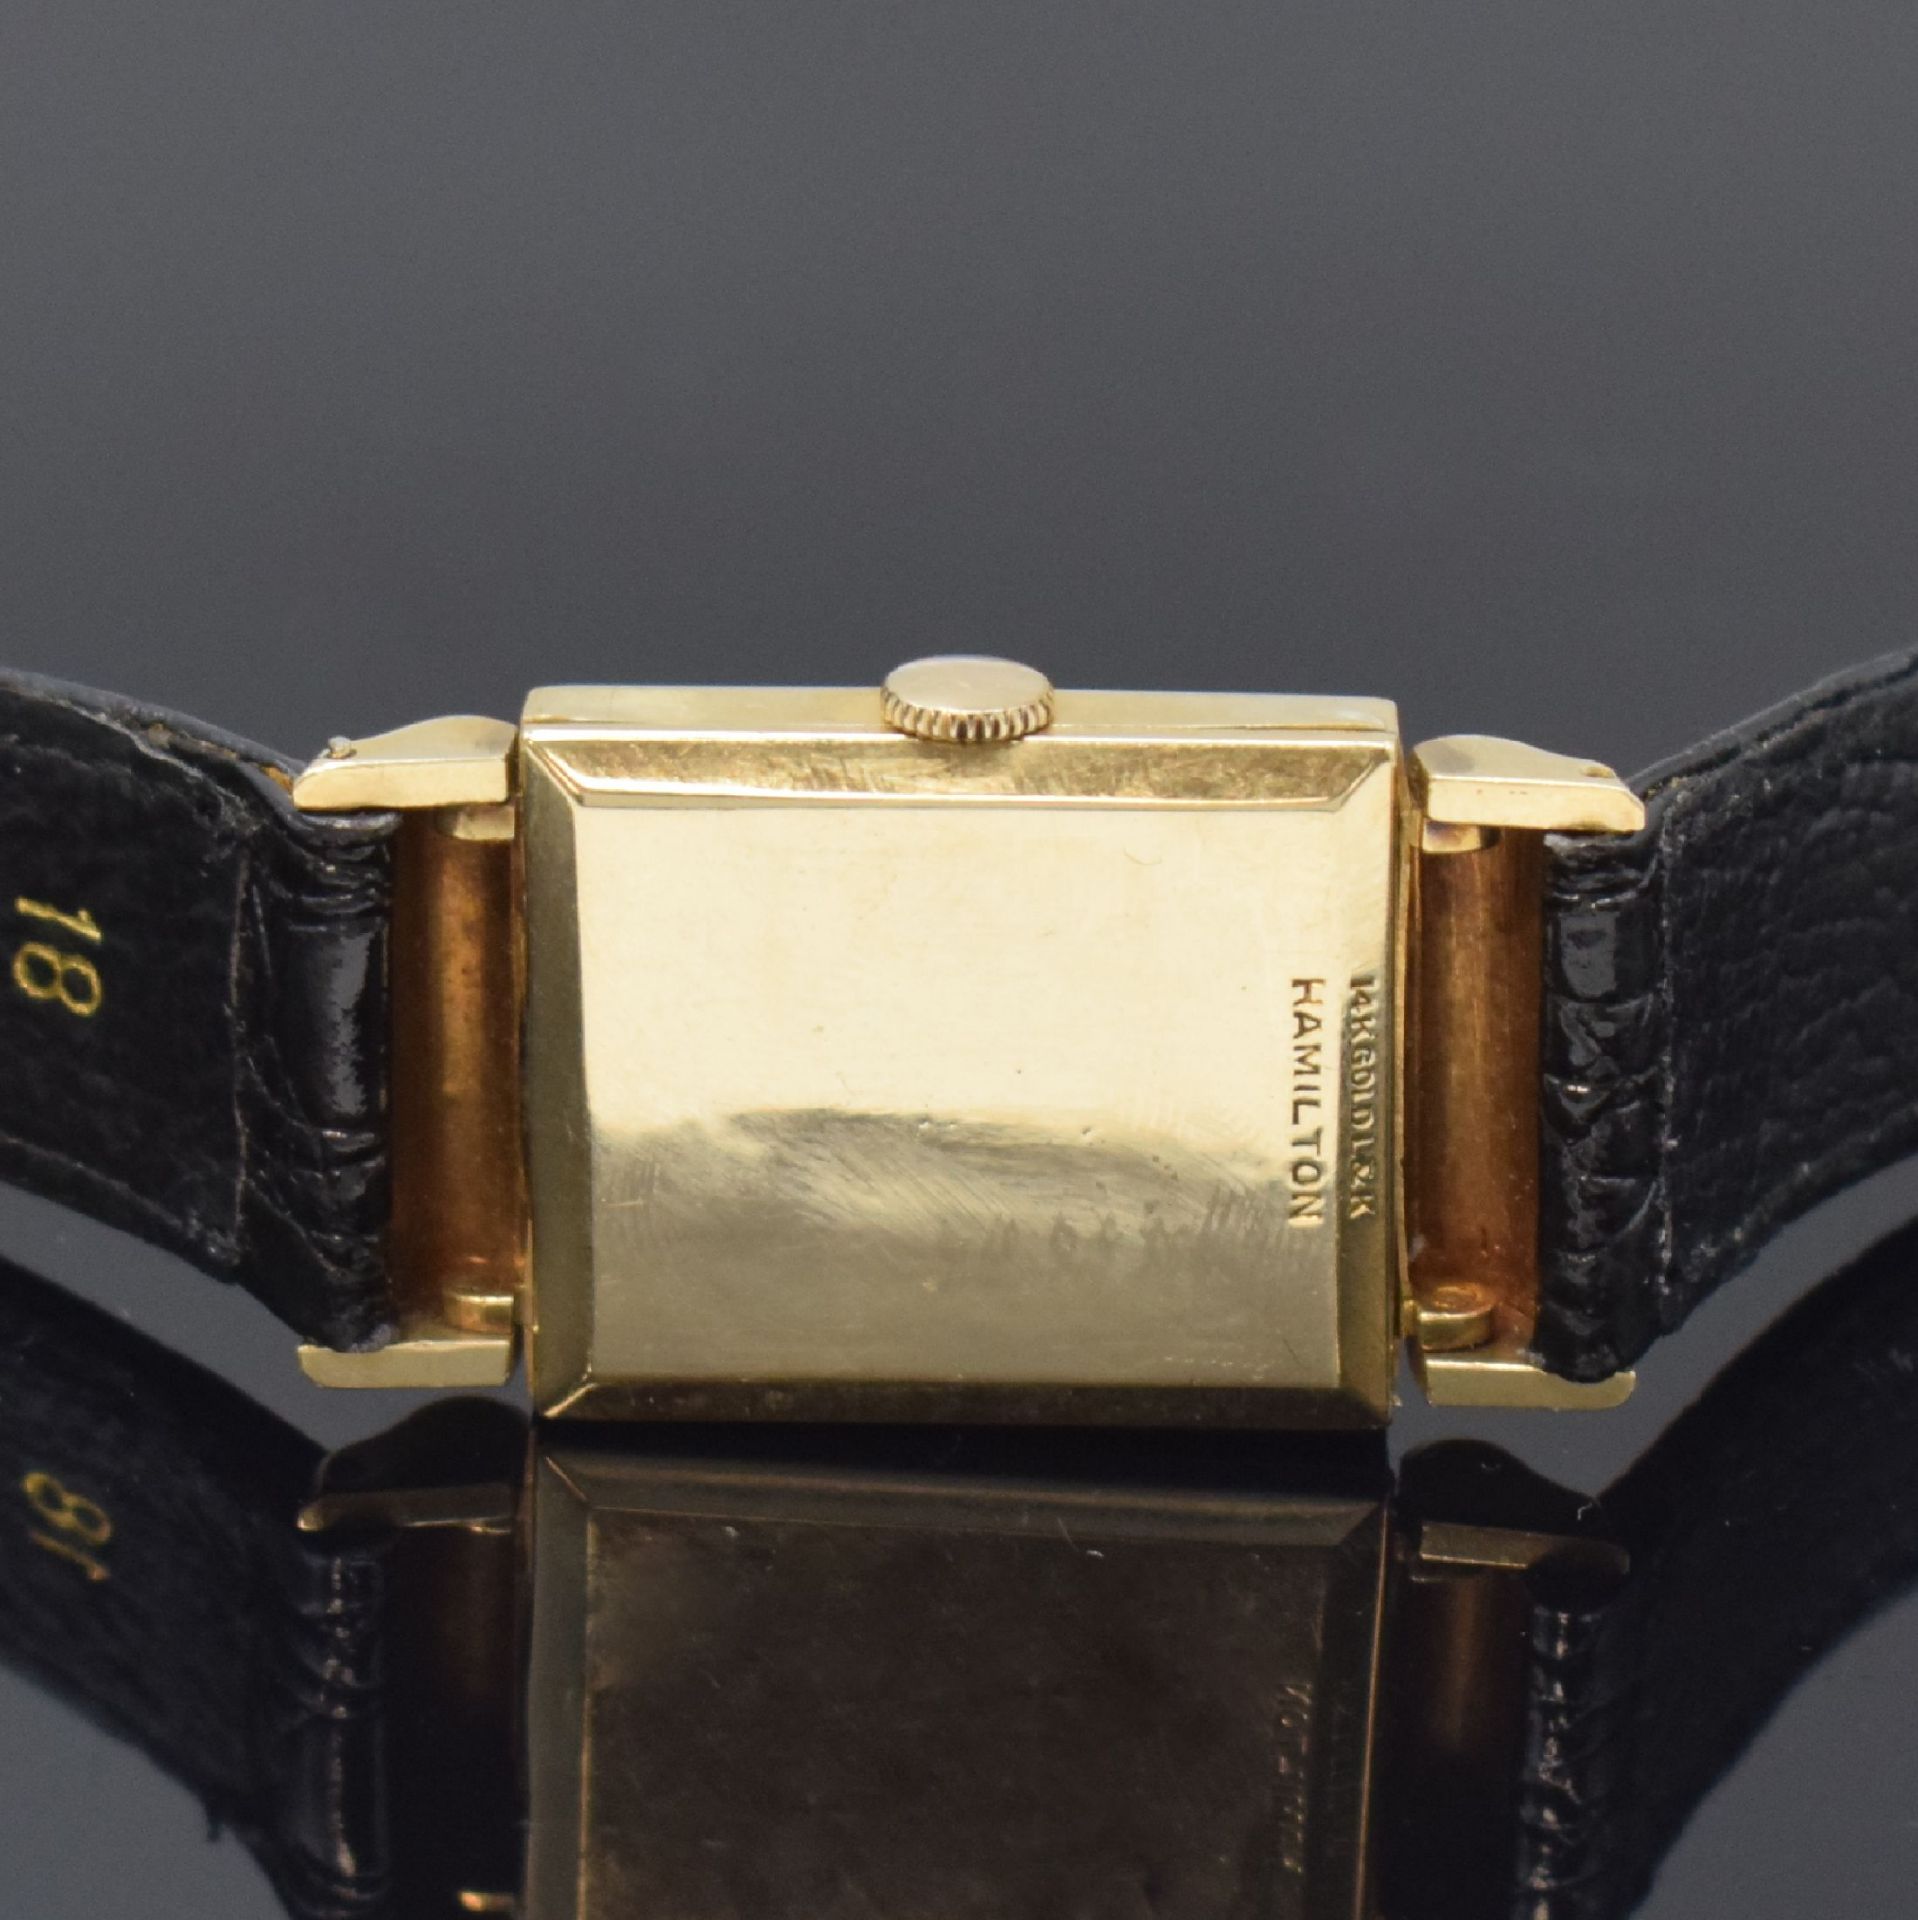 HAMILTON rechteckige Armbanduhr in 14k Gelbgold, USA um - Image 4 of 6